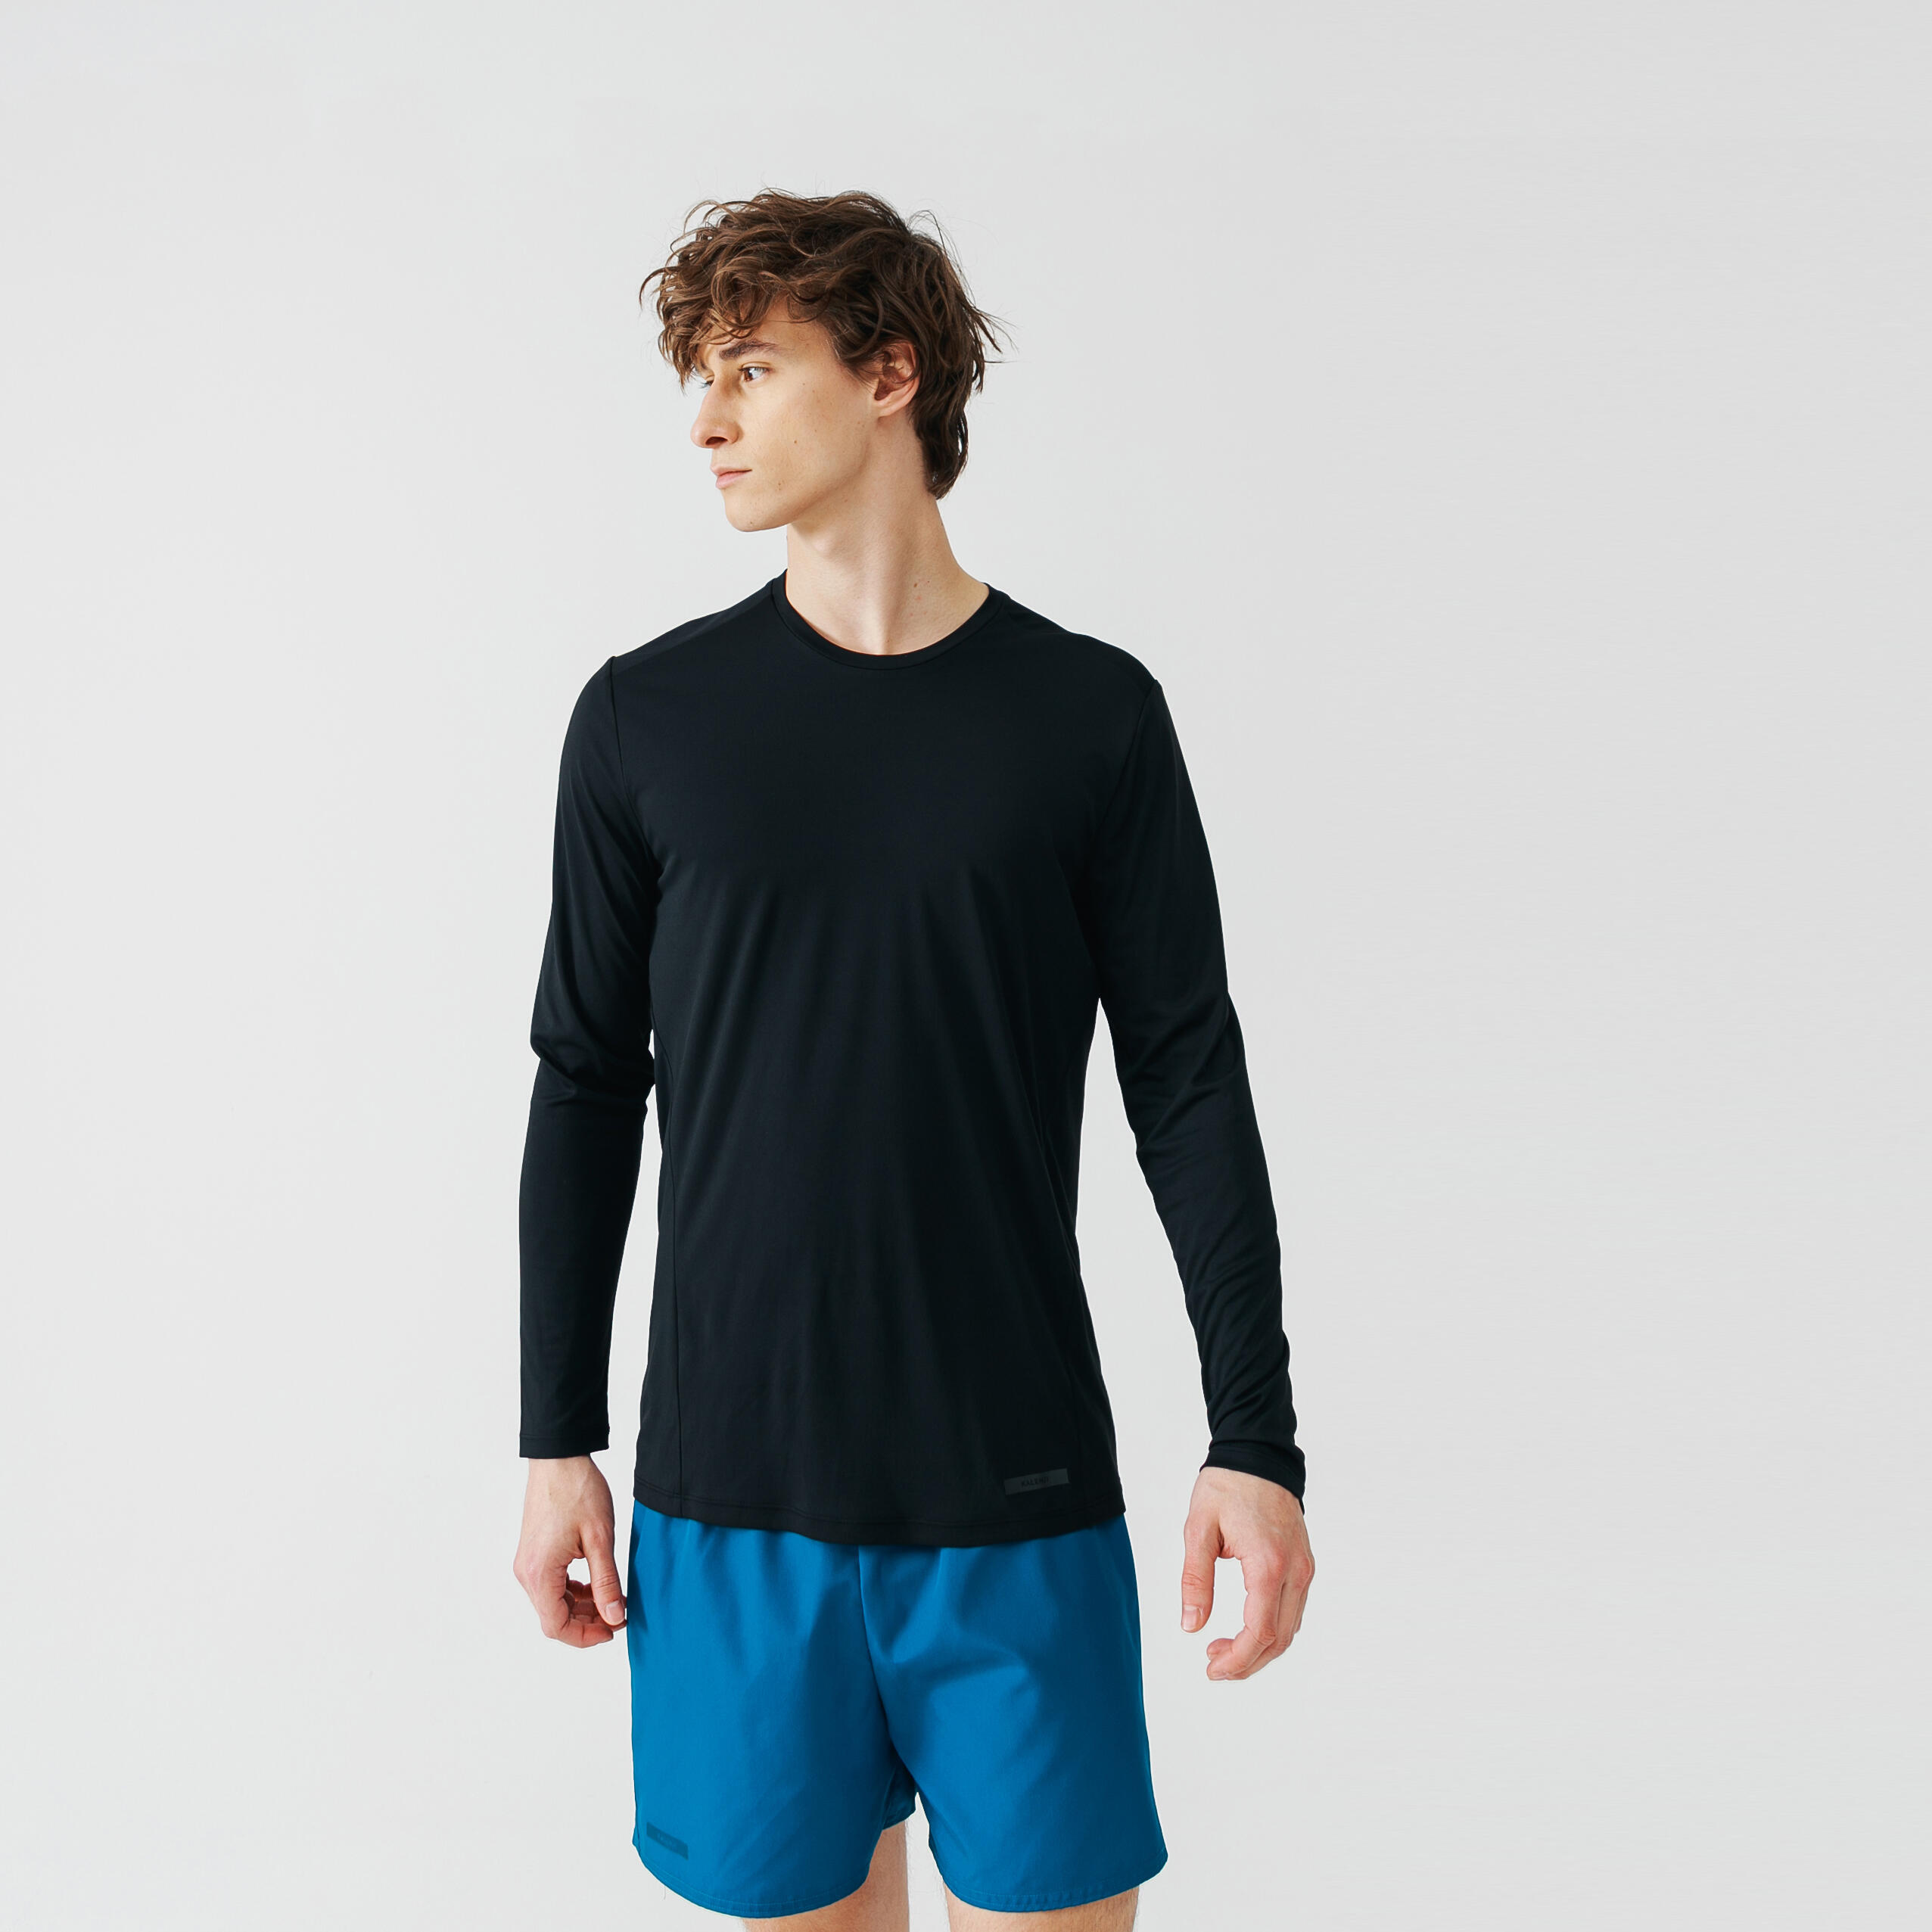 Men UV protect Running T-shirt - Black